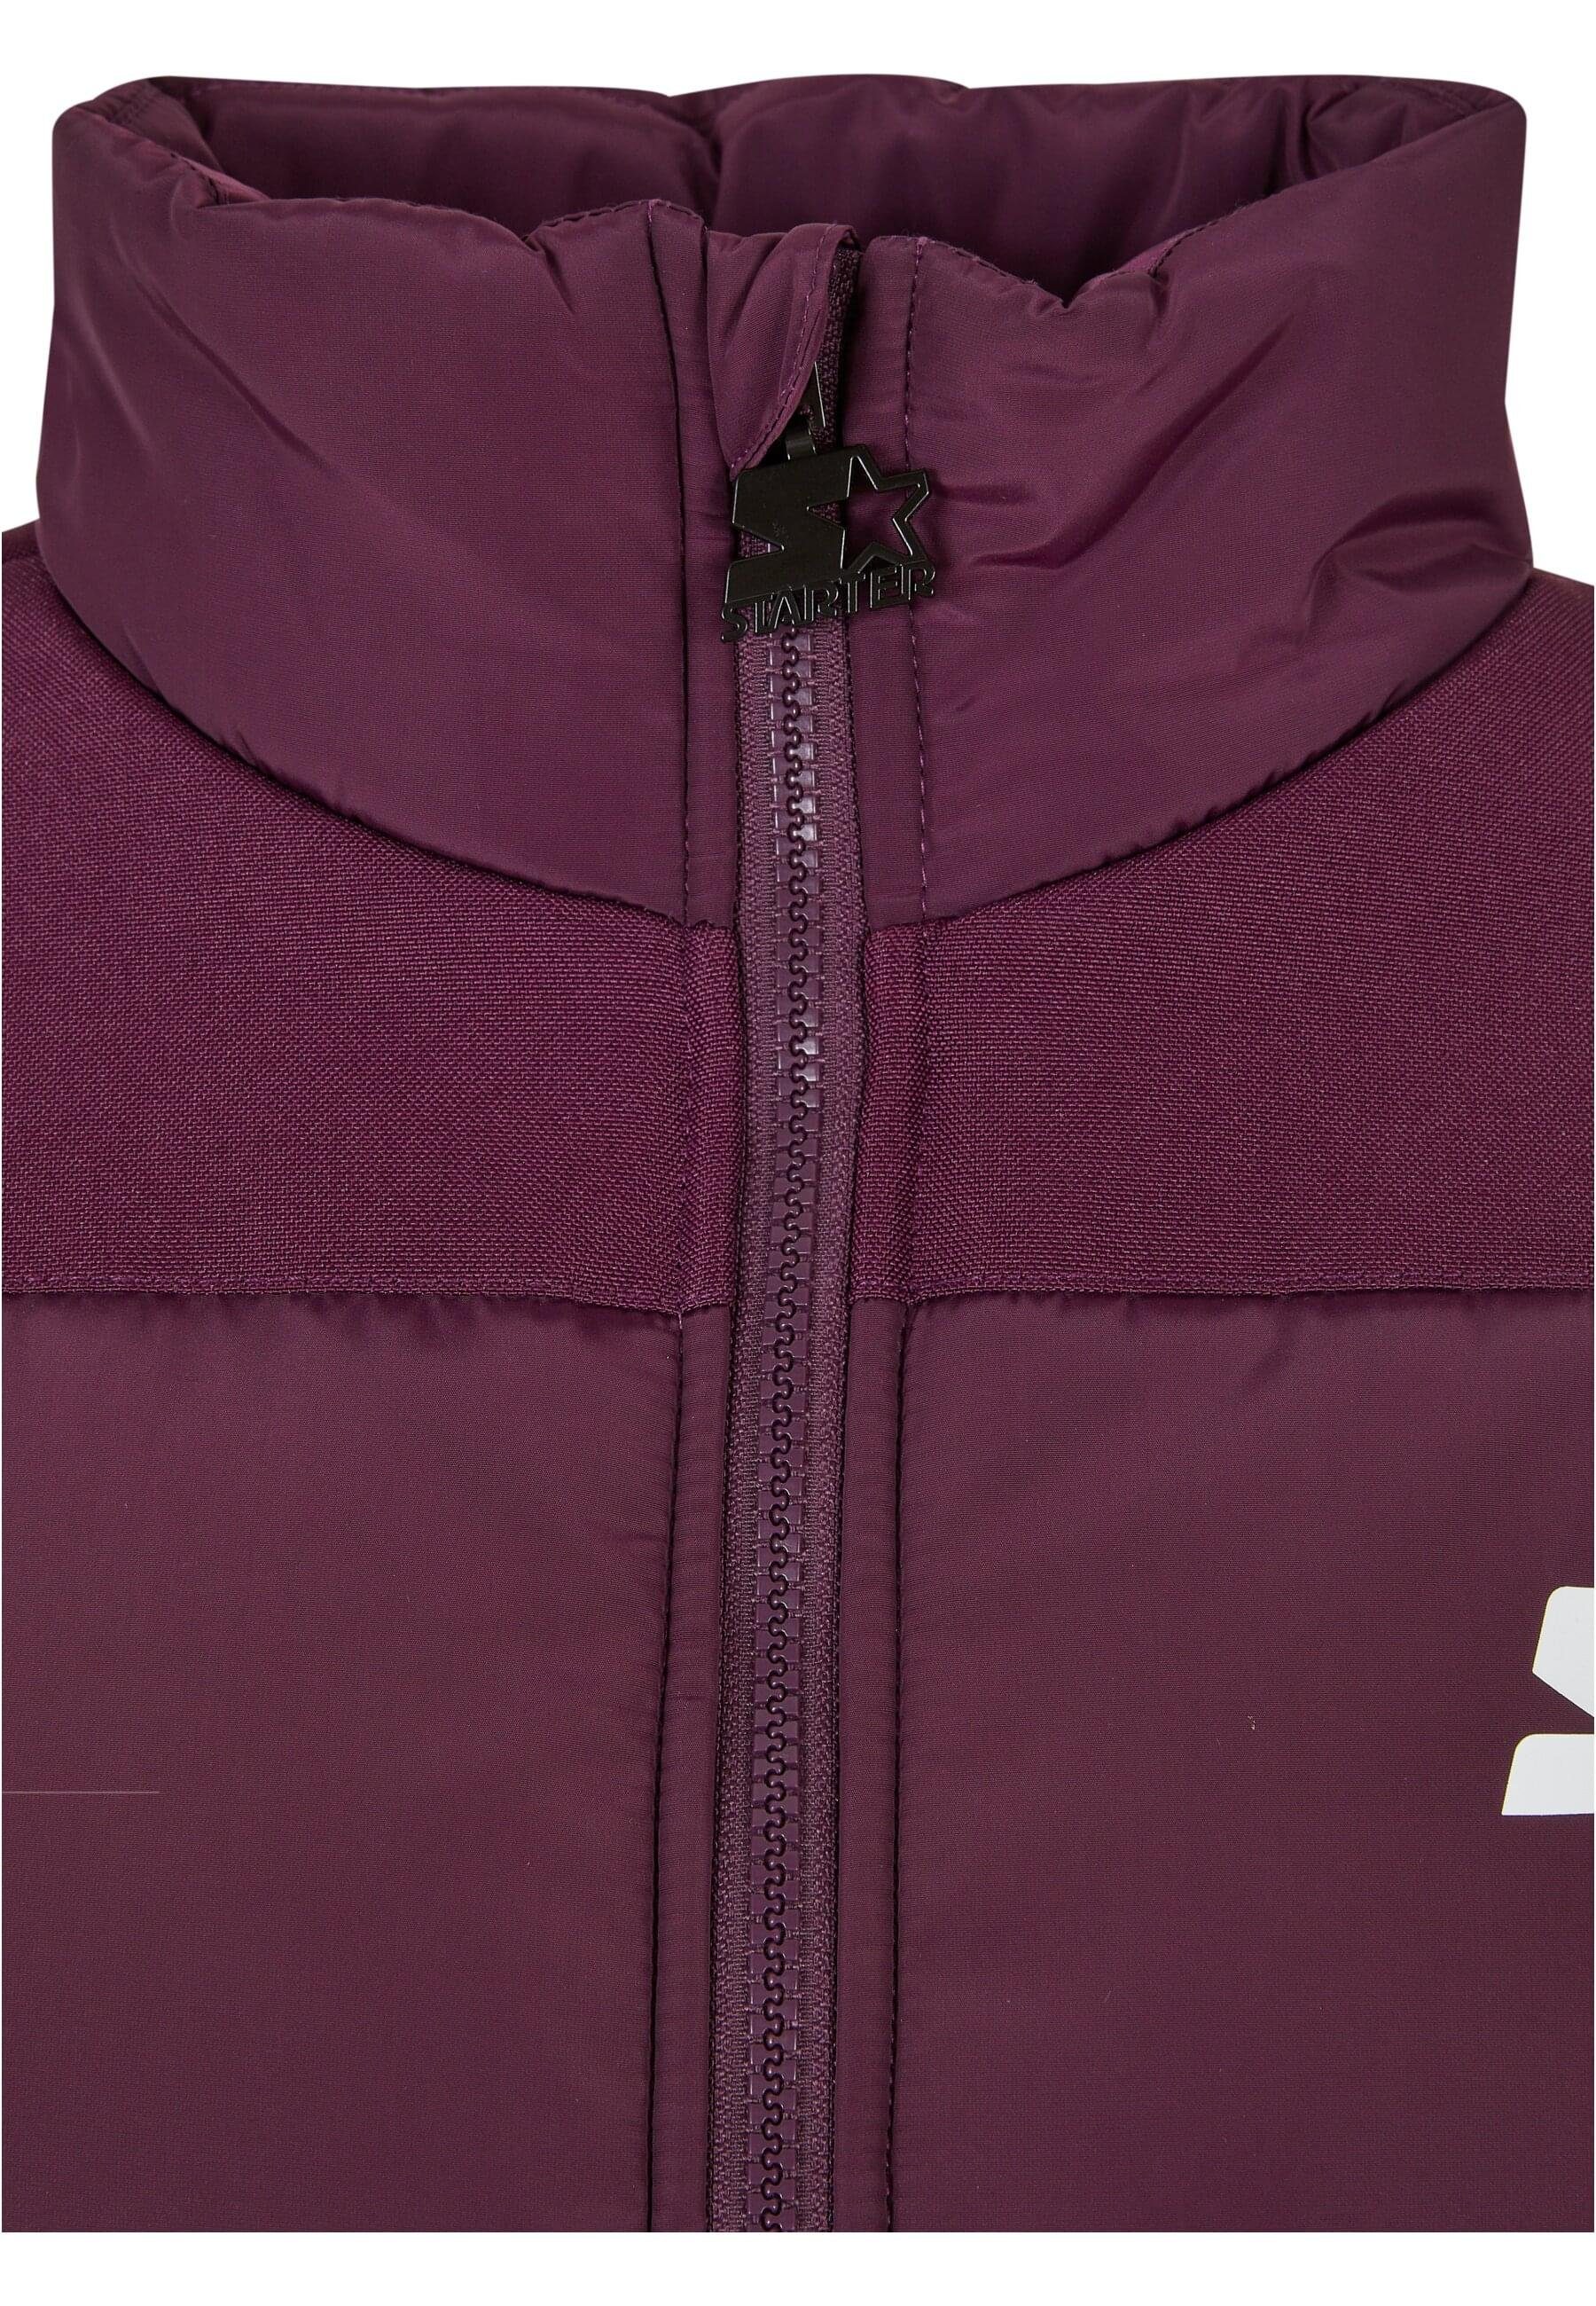 Black Label Jacket Logo Starter Winterjacke Damen Starter Puffer (1-St) darkviolet Ladies